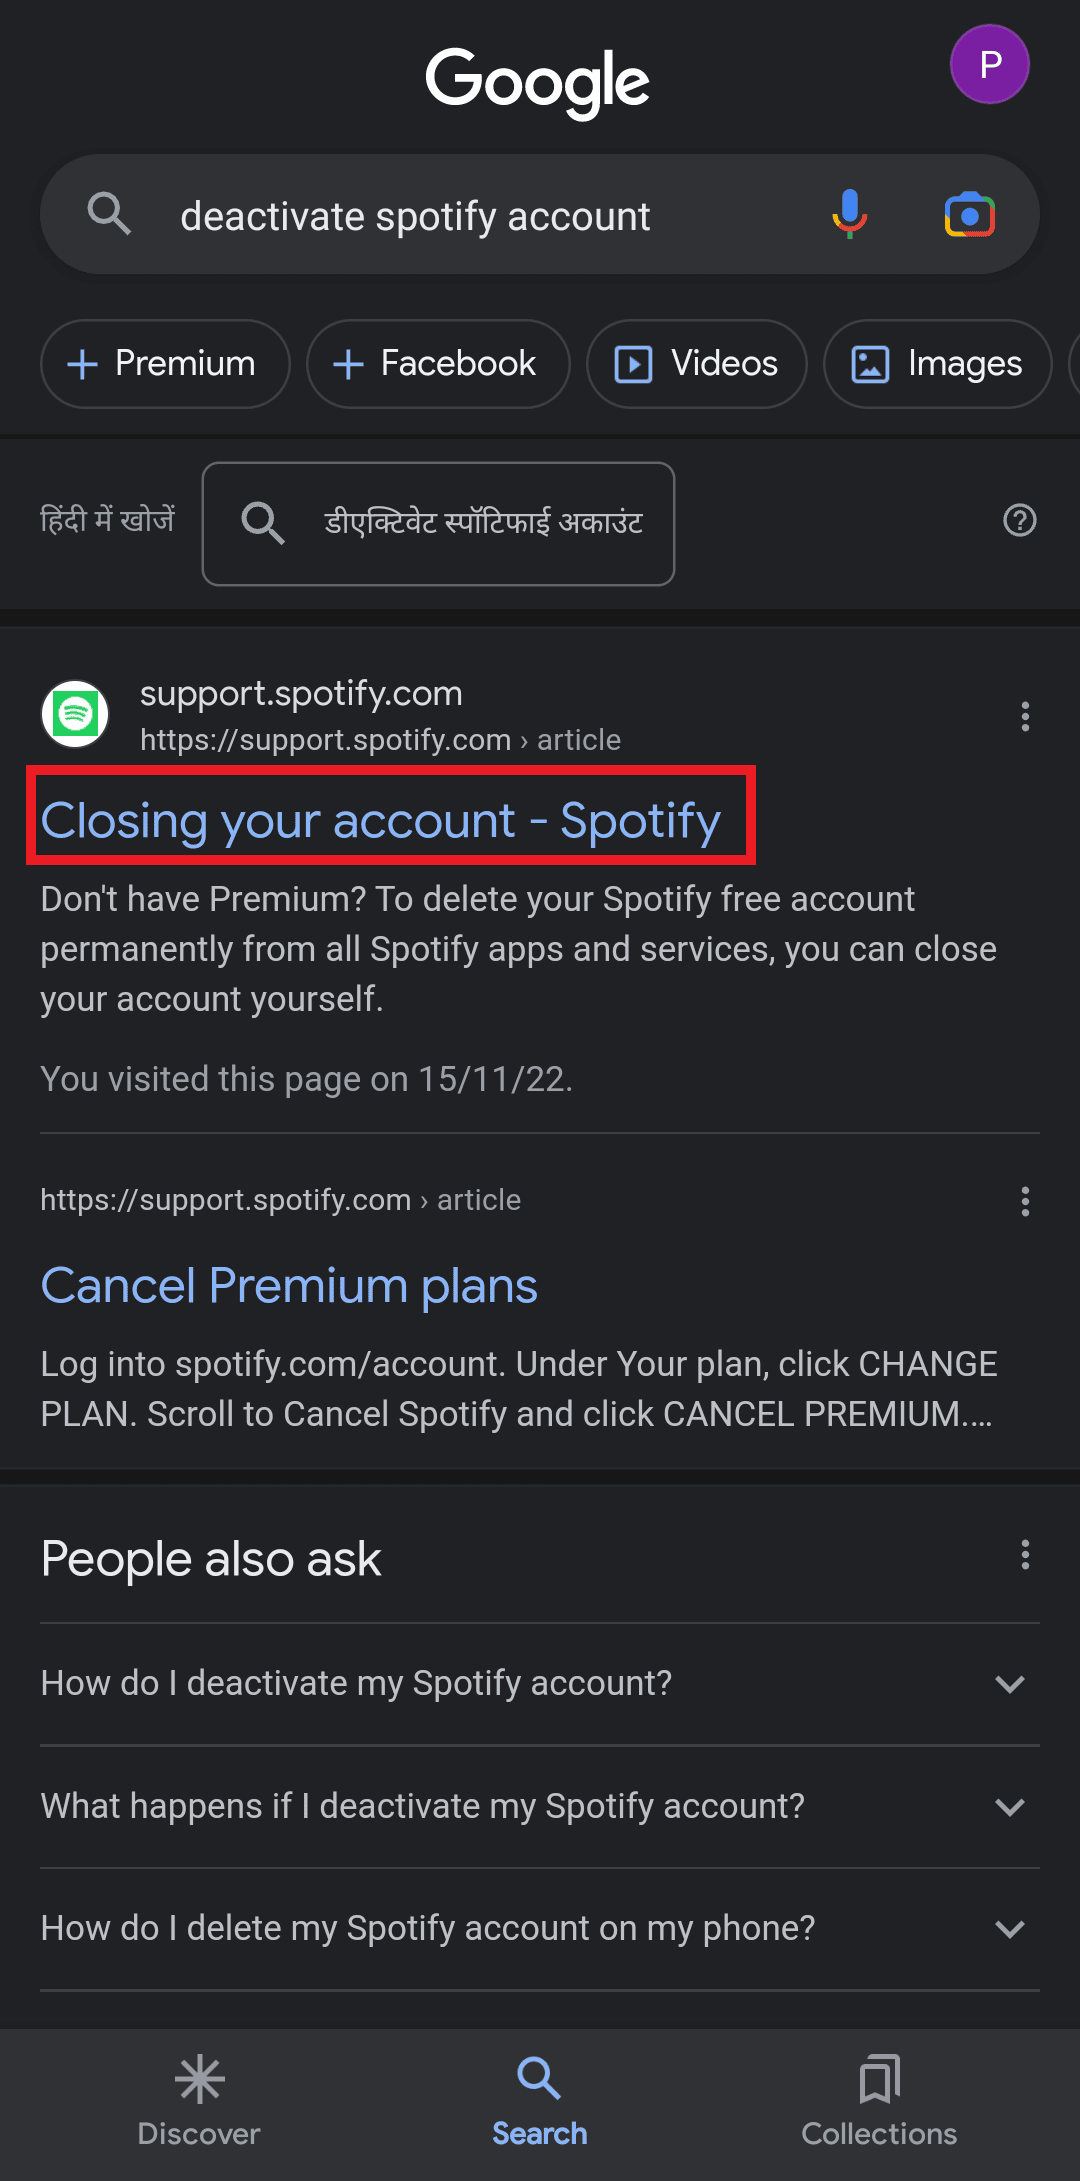 deactivate spotify account